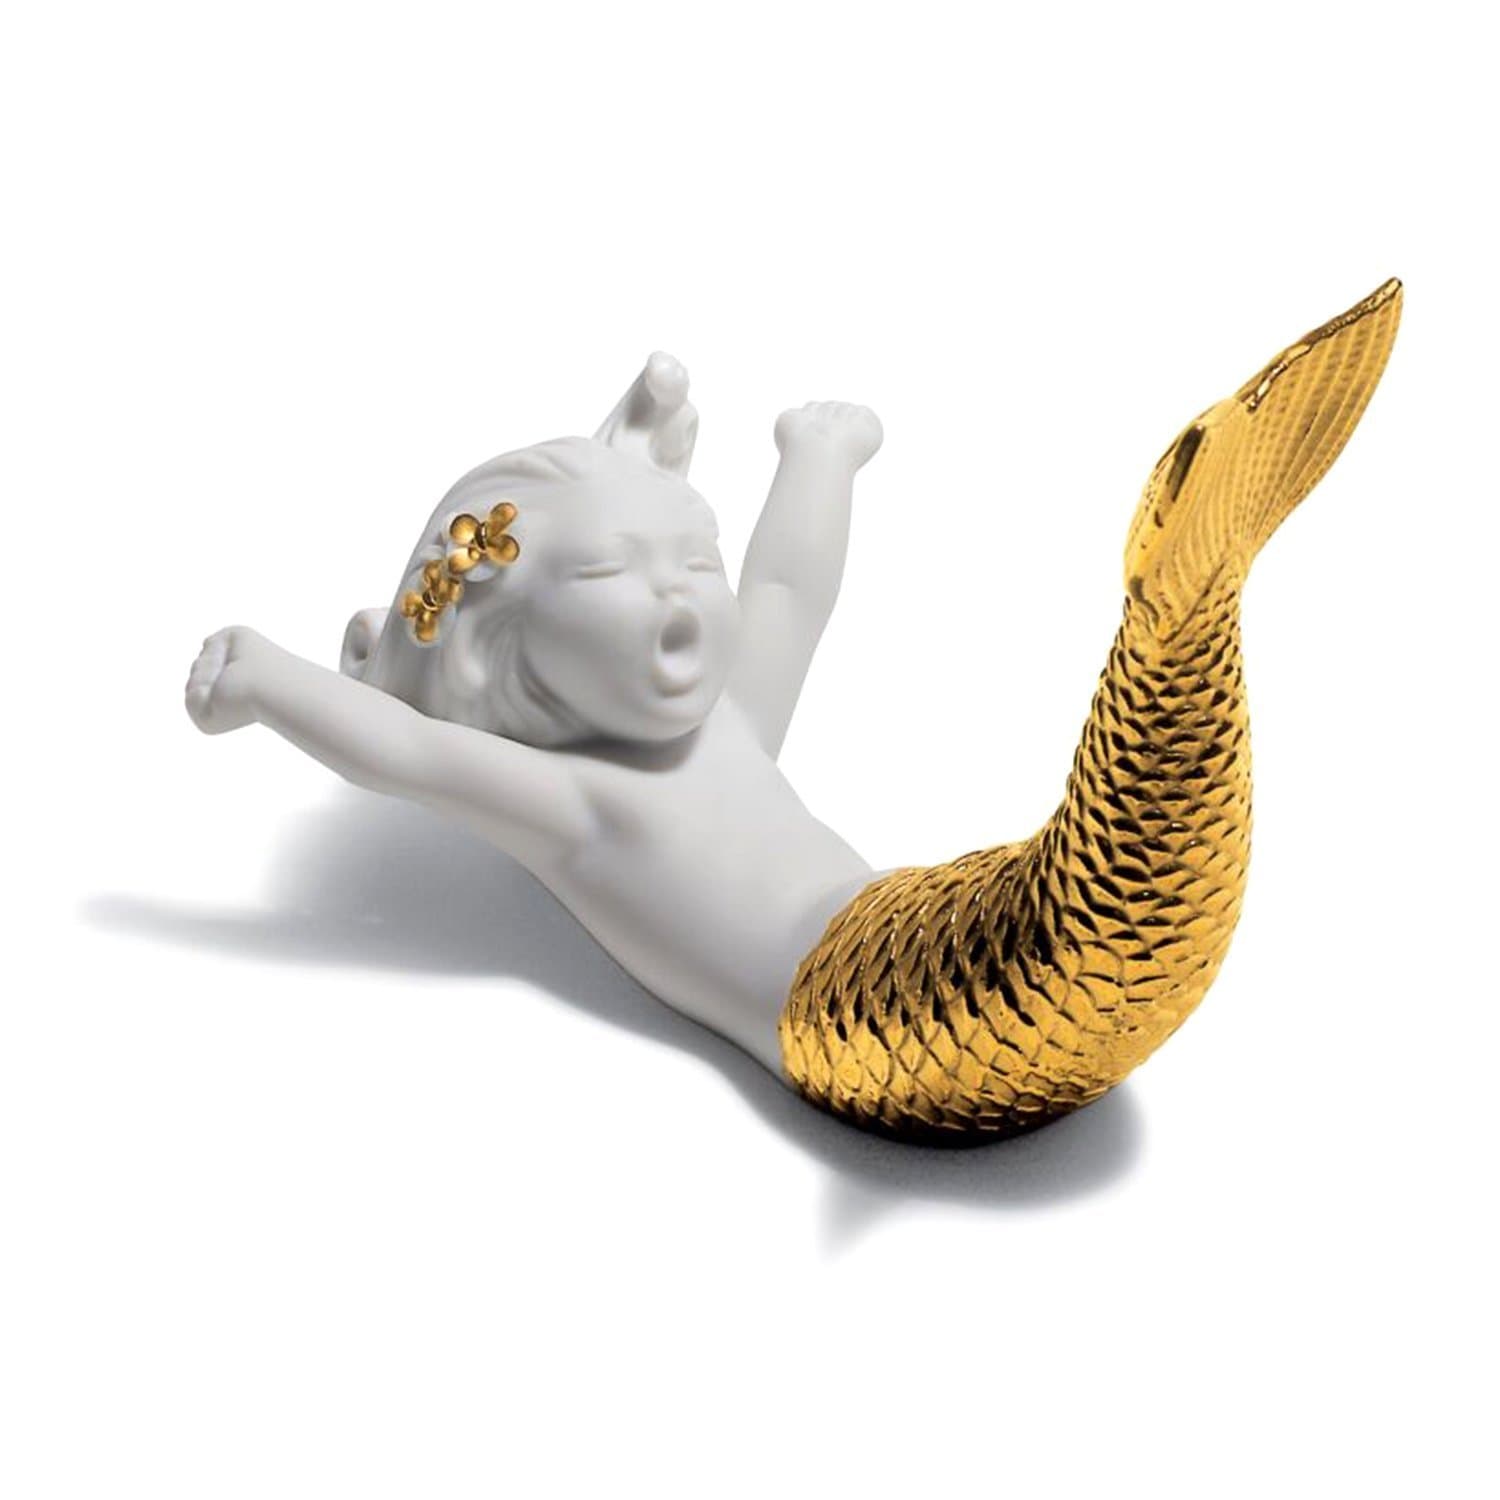 Lladro Waking Up At Sea Mermaid Figurine - 1008561 - Jashanmal Home